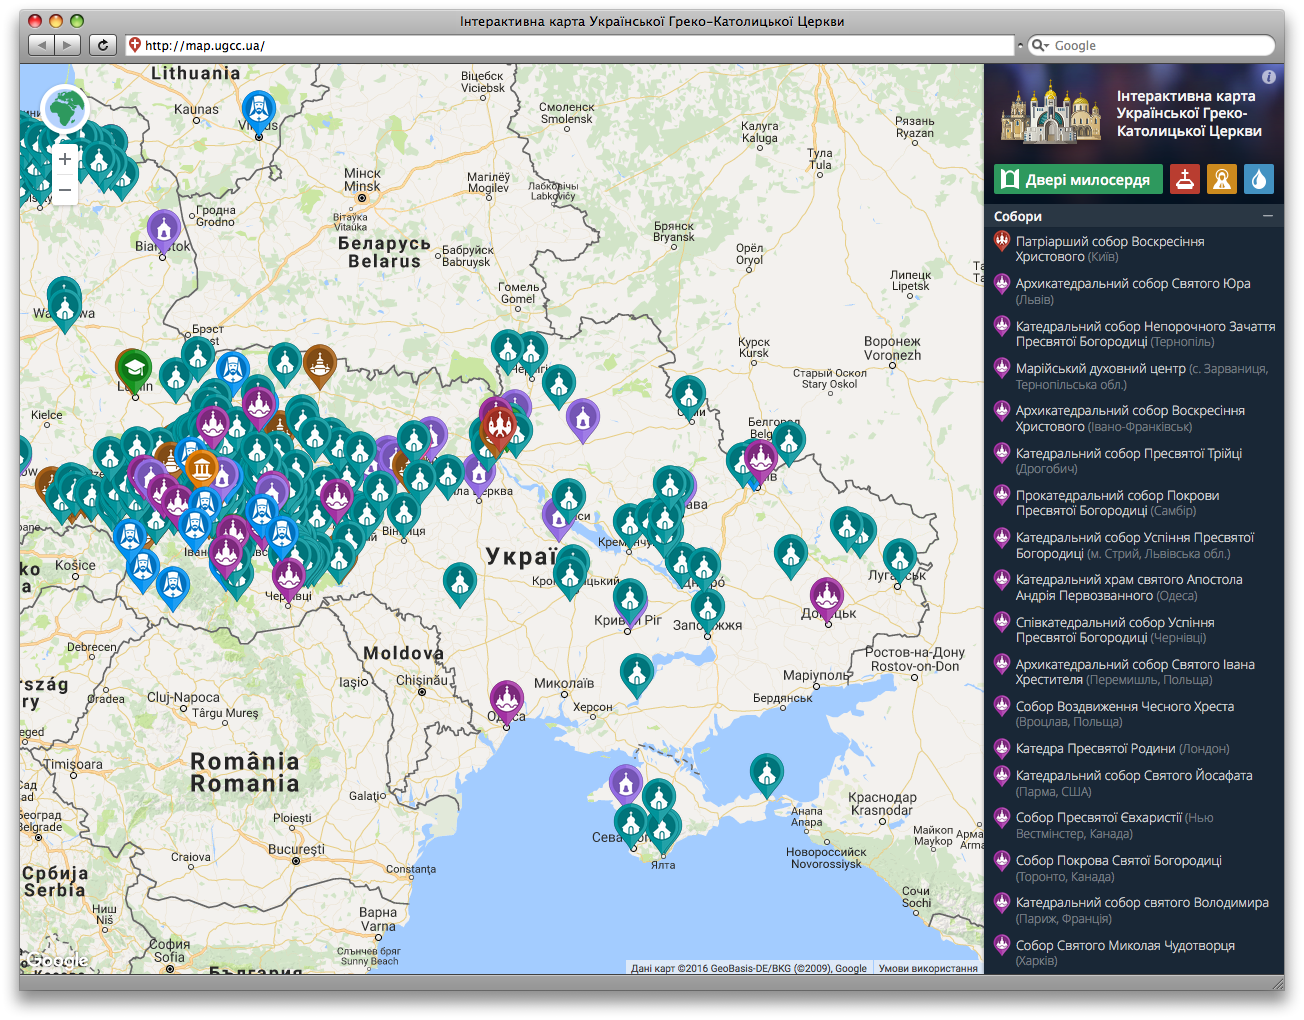 Інтерактивна карта Української Греко-Католицької Церкви